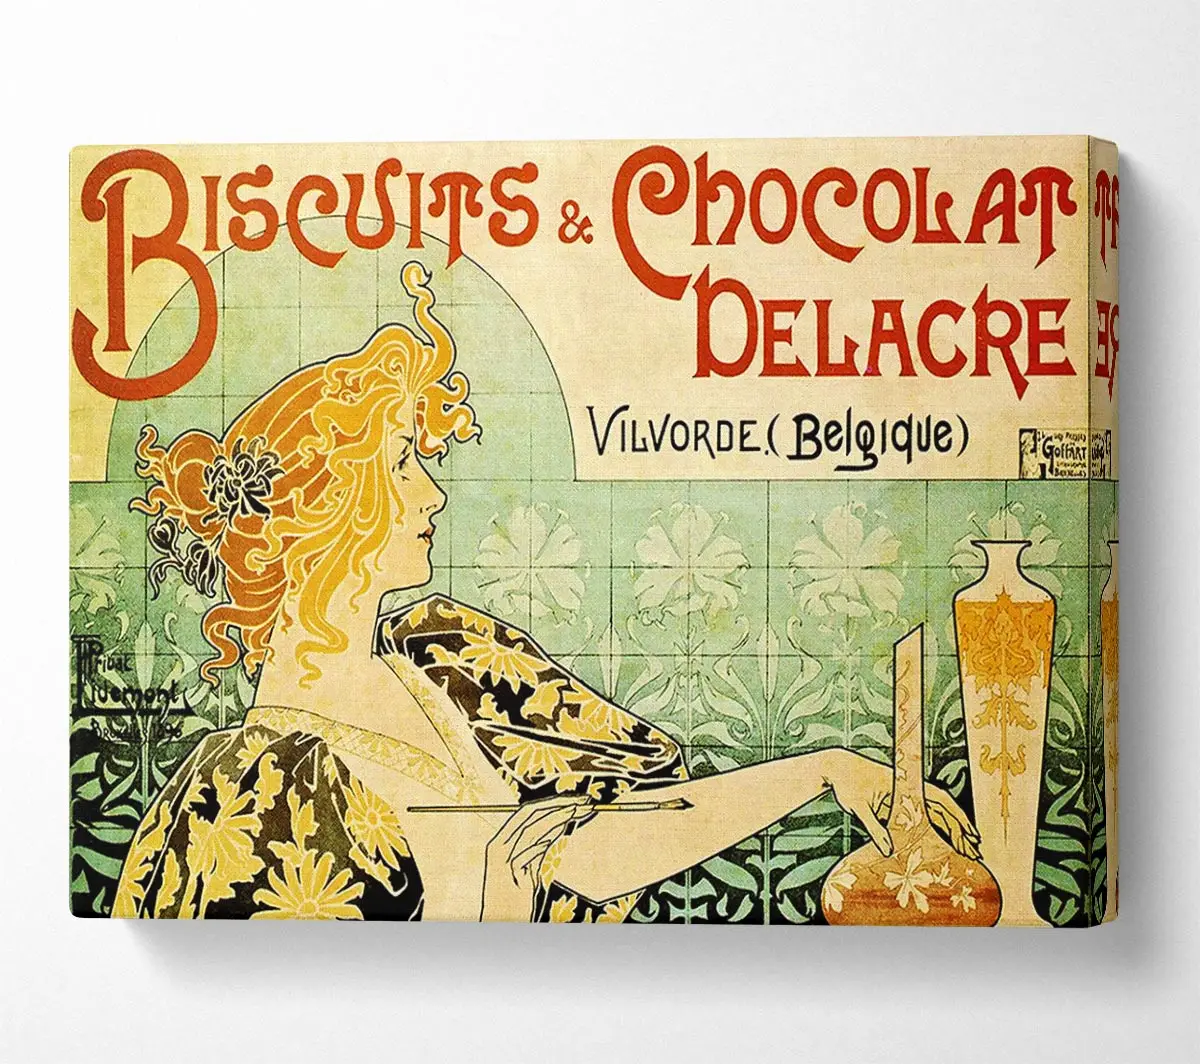 Wandkunst Delacre Kekse Chocolat und